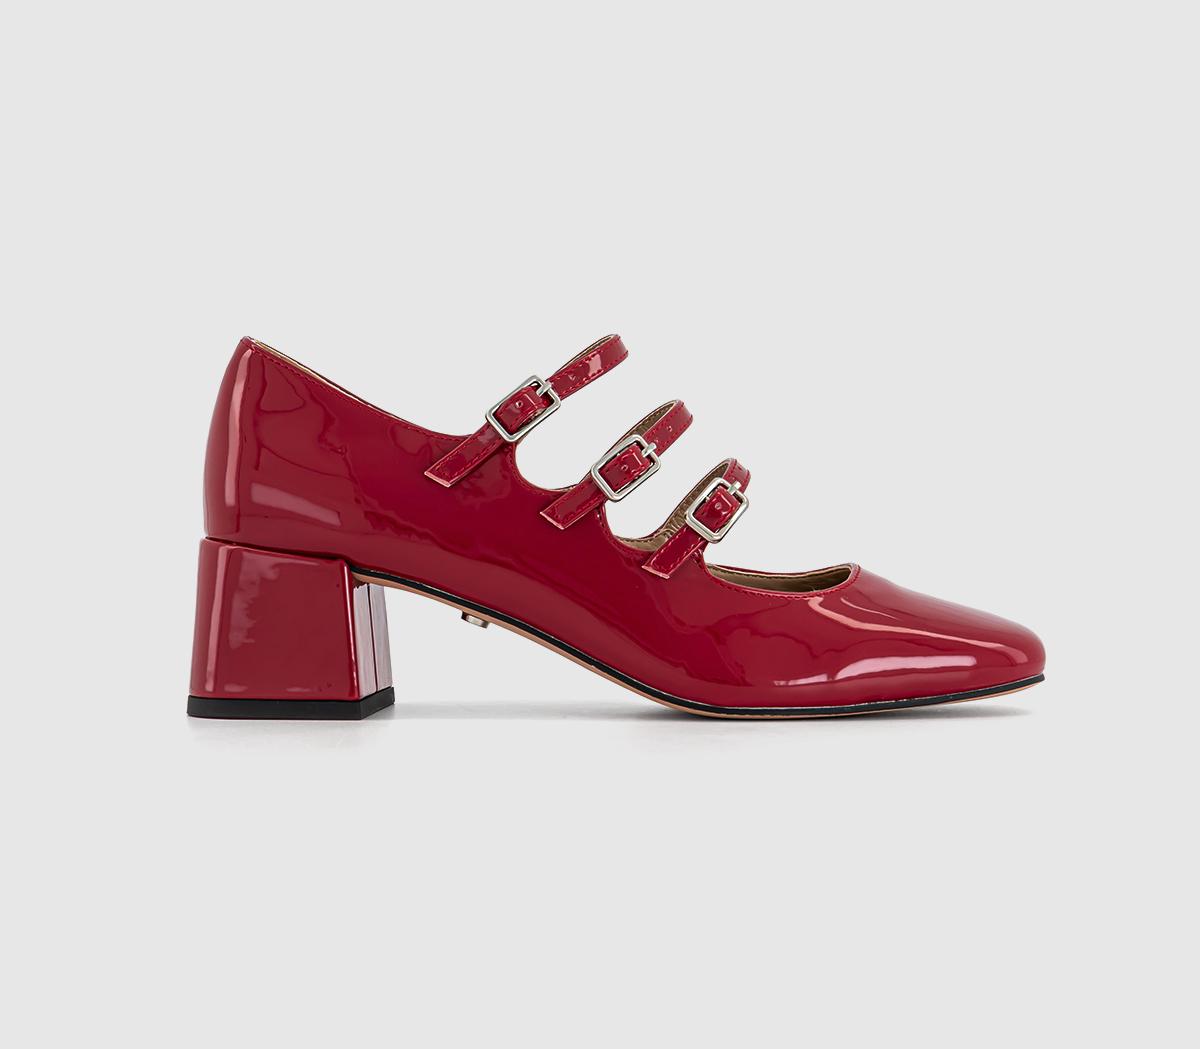 Marvellous Triple Stap Mary Jane Block Heels Red Patent